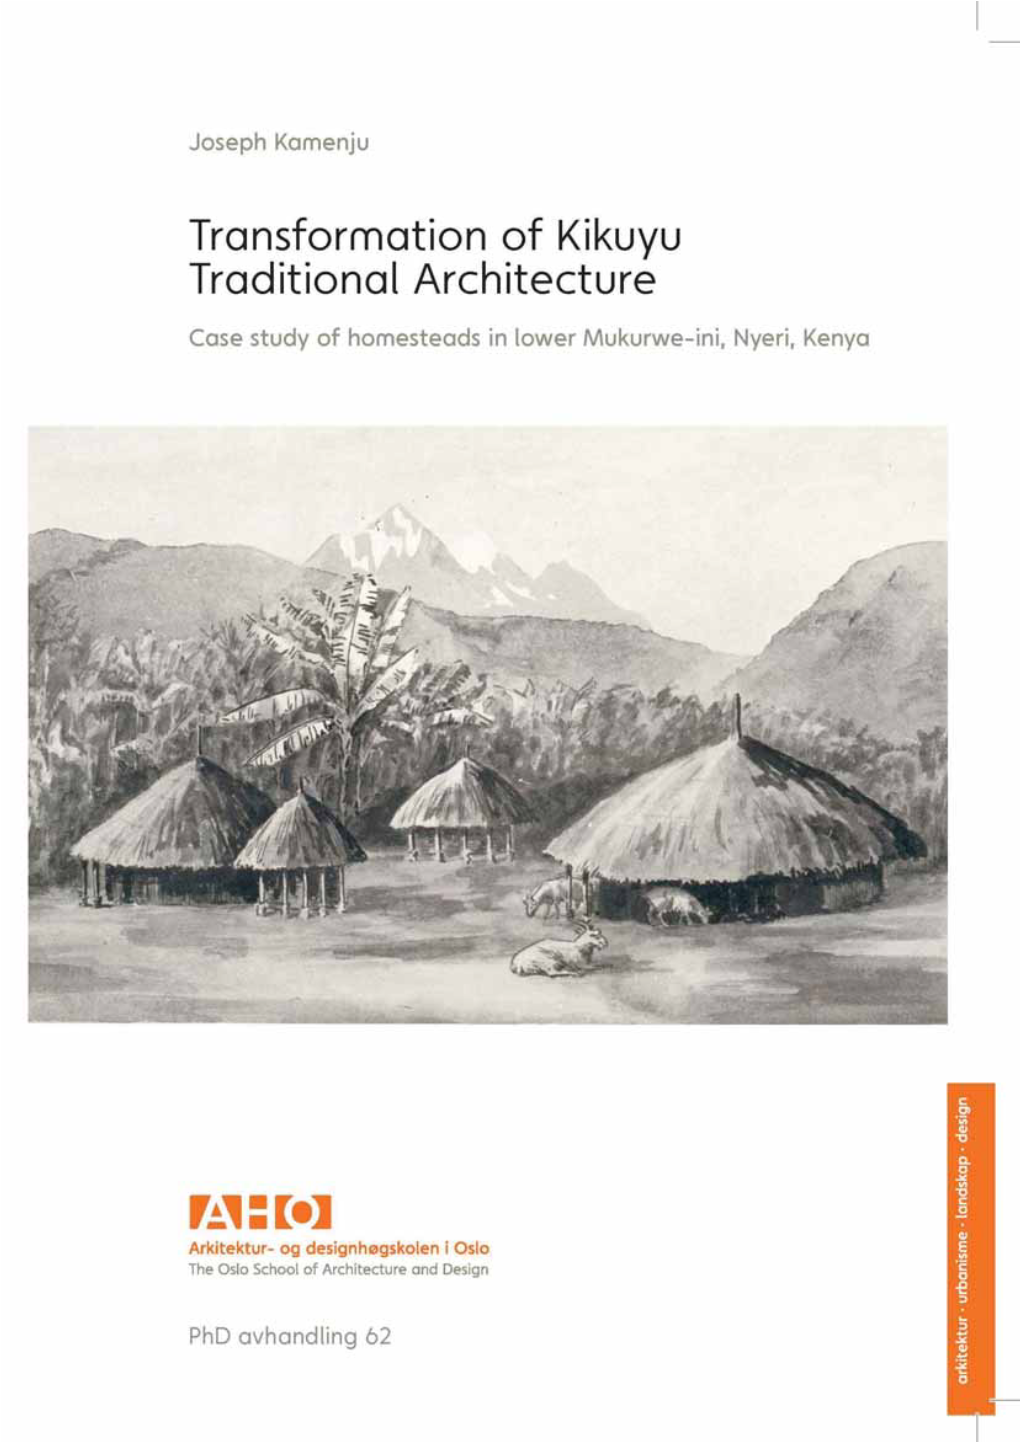 Transformation of Kikuyu Traditional Architecture: Case Study of Homesteads in Lower Mukurwe-Ini, Nyeri, Kenya